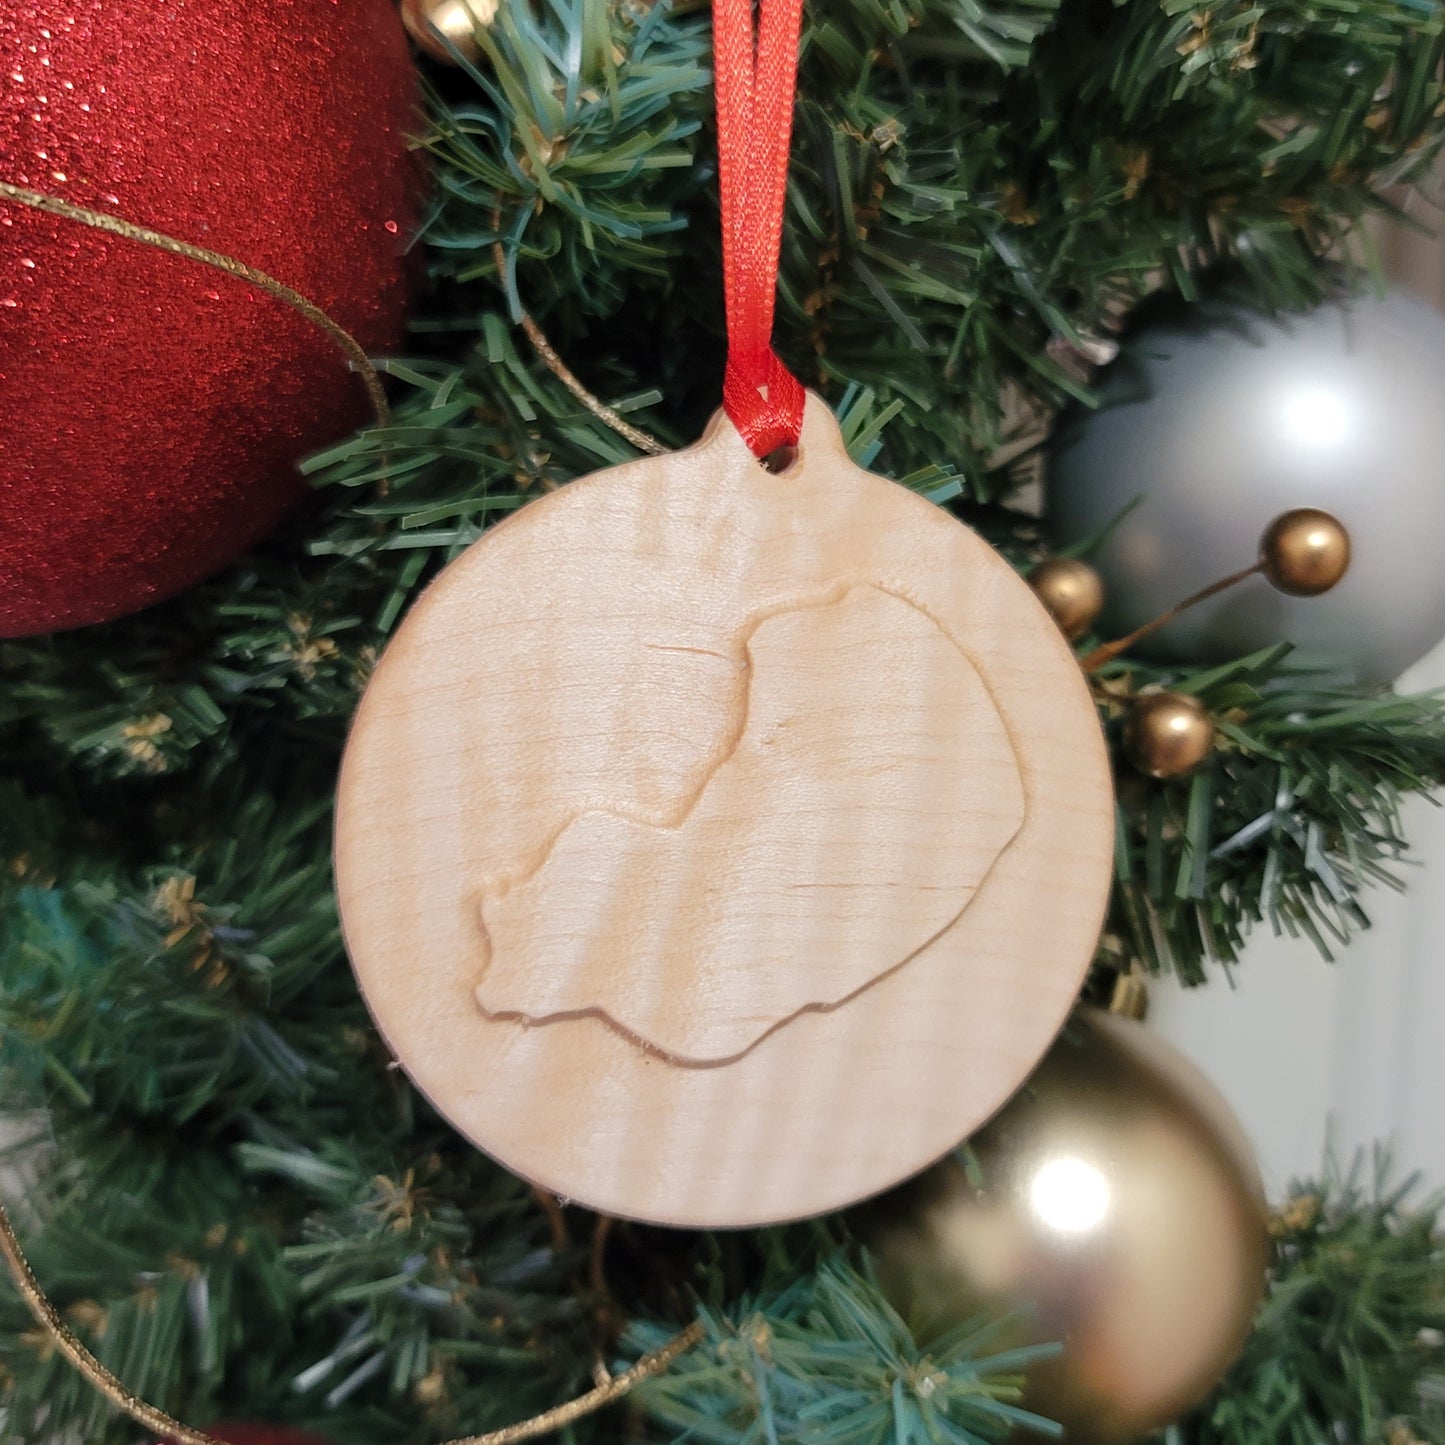 Wood 3D Christmas Ornament Lake (Michigan) - Matt Granger Designs